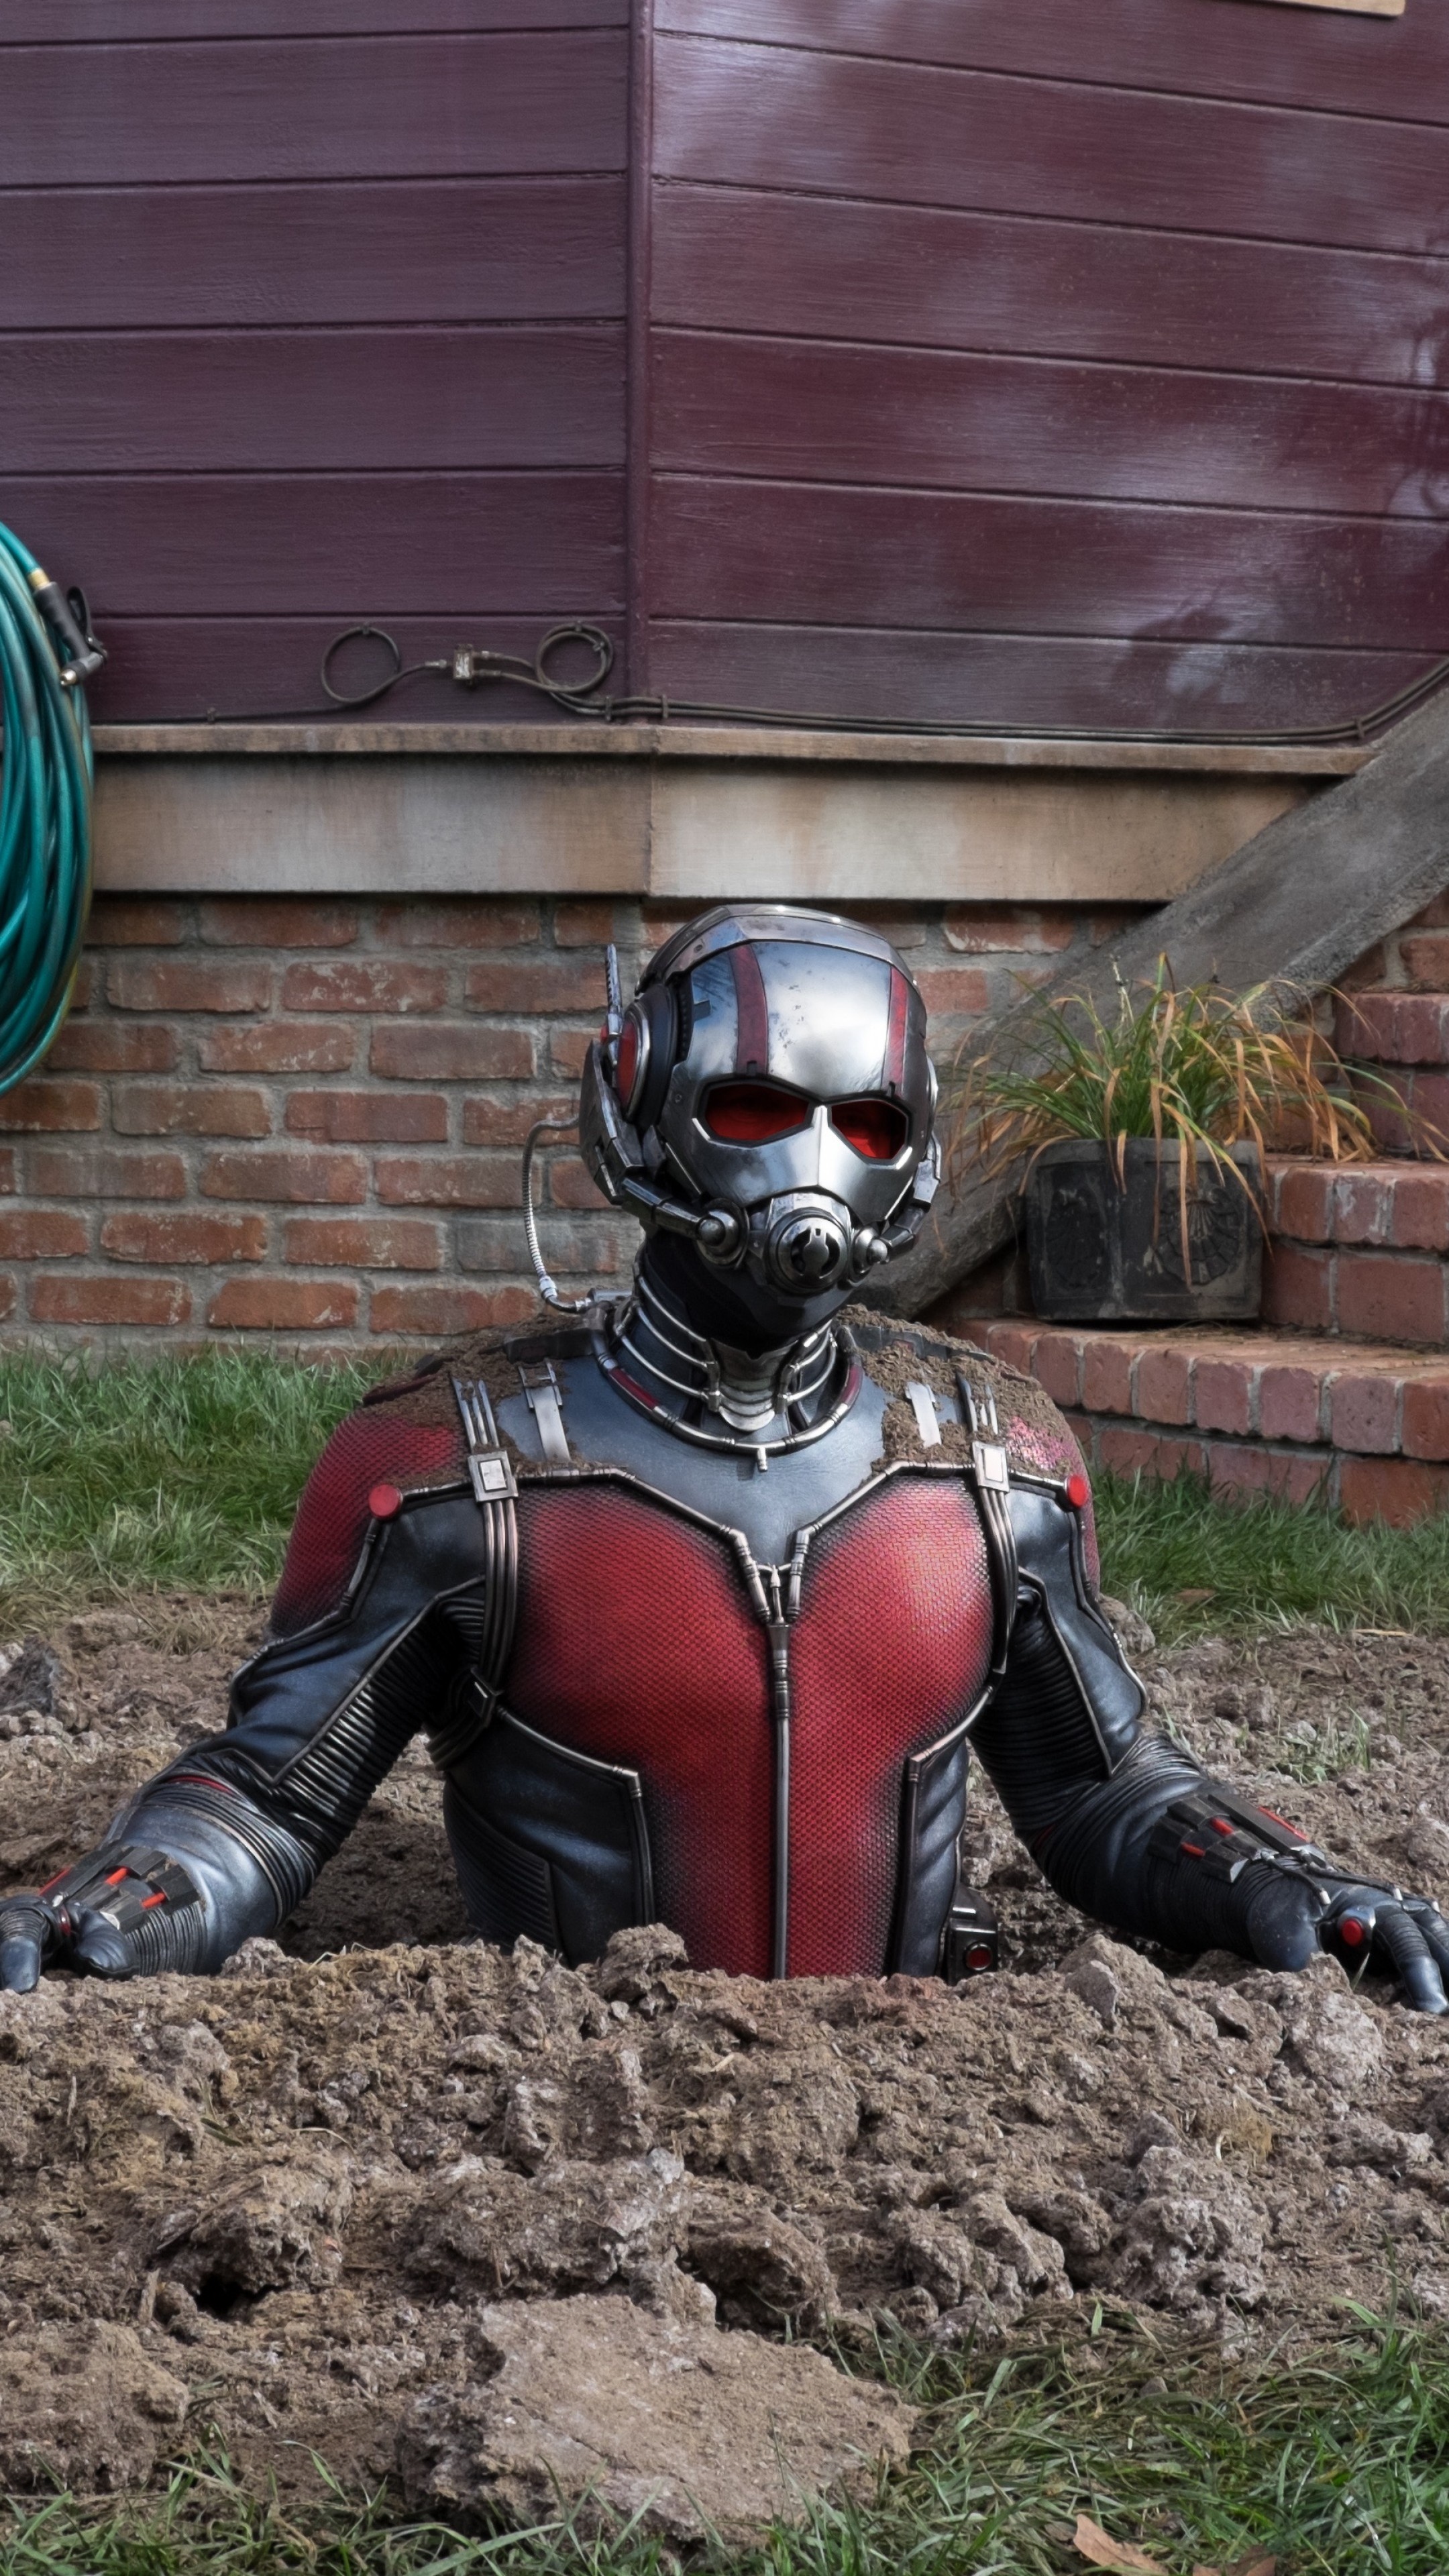 Paul Rudd: Plays Ant-Man in the Marvel Cinematic Universe, Superhero. 2160x3840 4K Background.